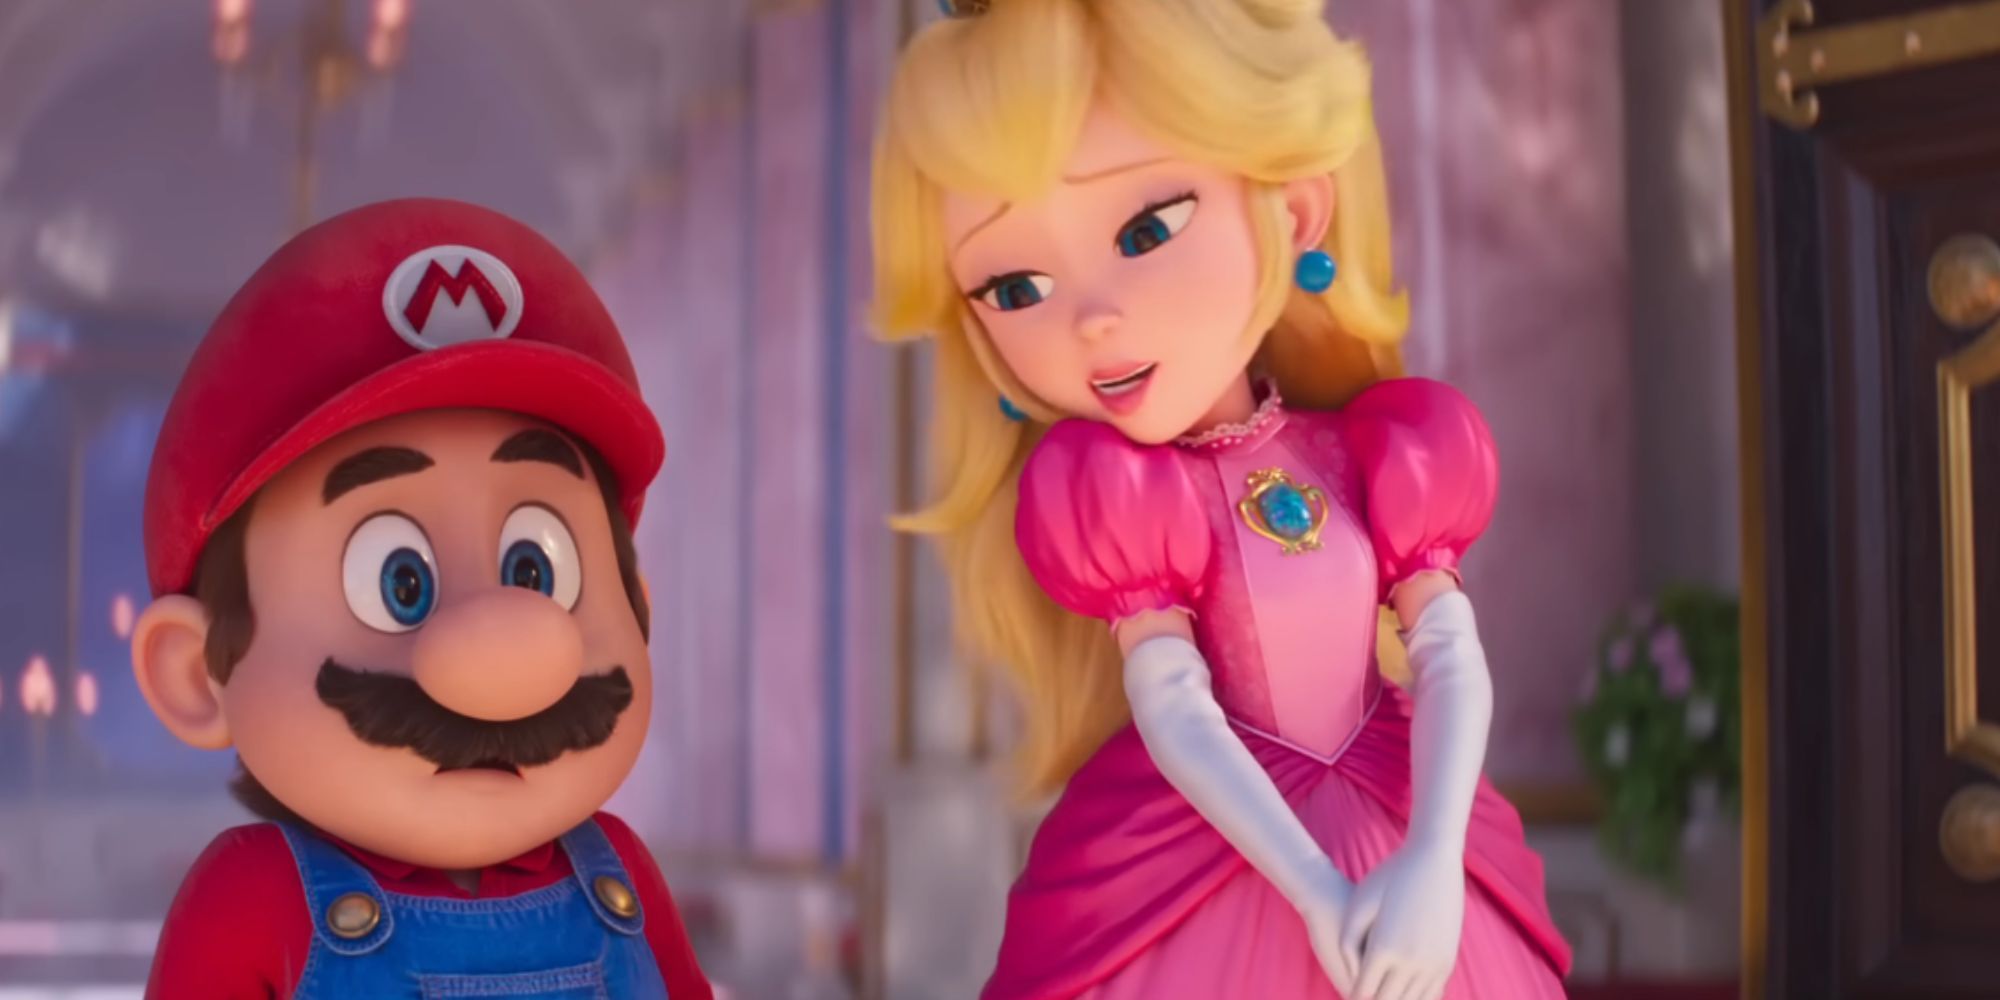 Princess Peach talks to Mario inside her castle in The Super Mario Bros. Movie